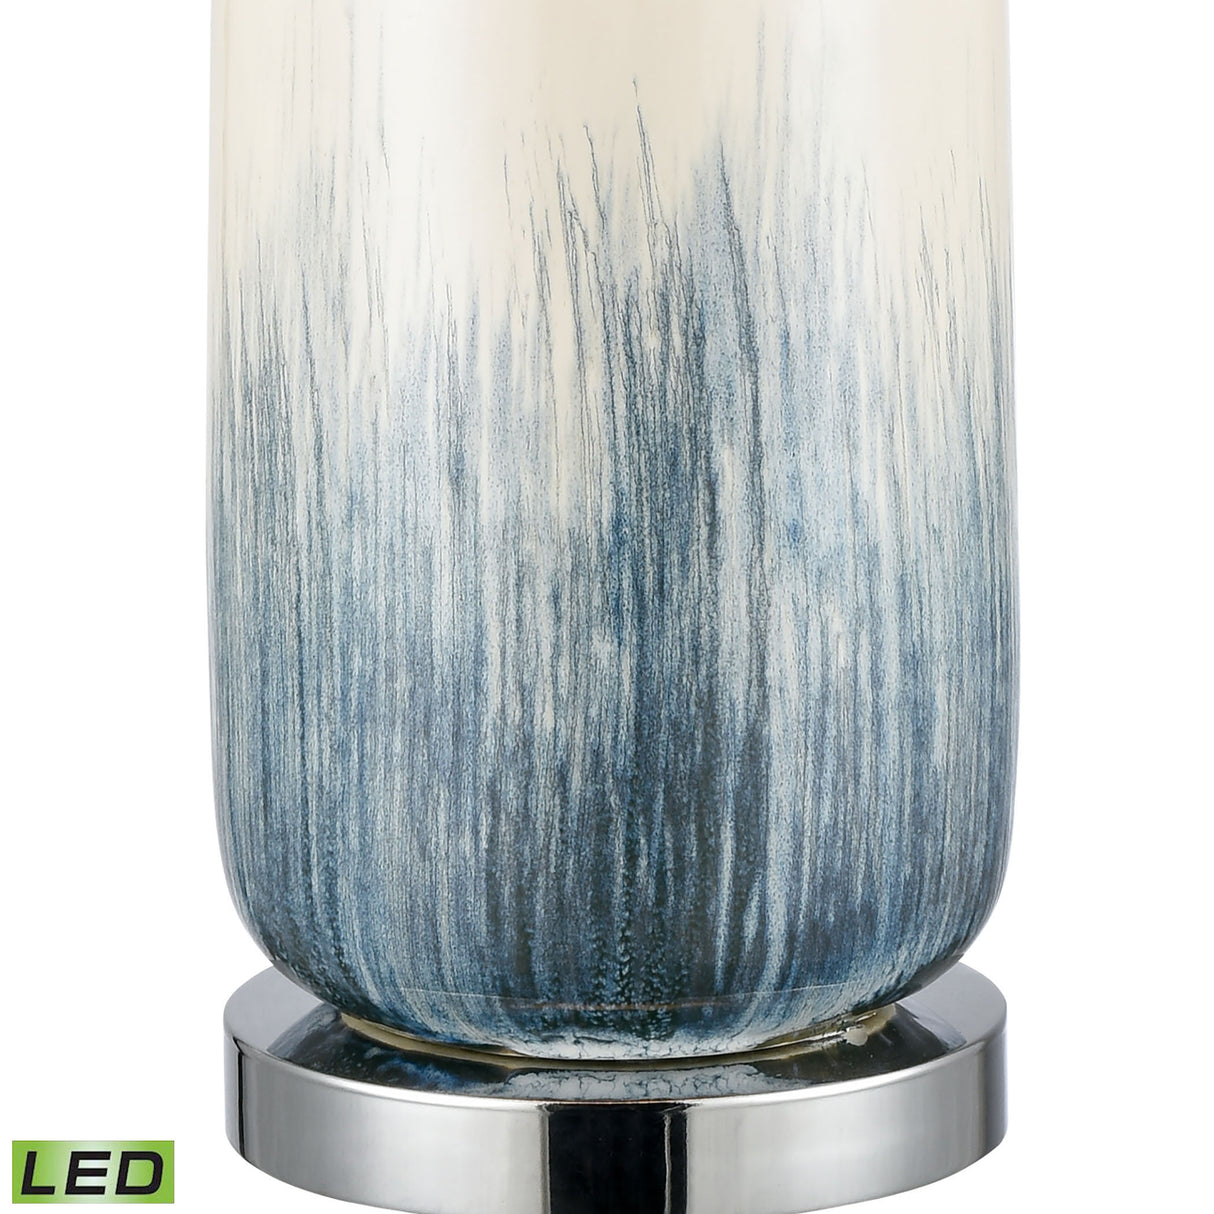 Elk S0019-8027-LED Cason Bay 27'' High 1-Light Table Lamp - Blue - Includes LED Bulb